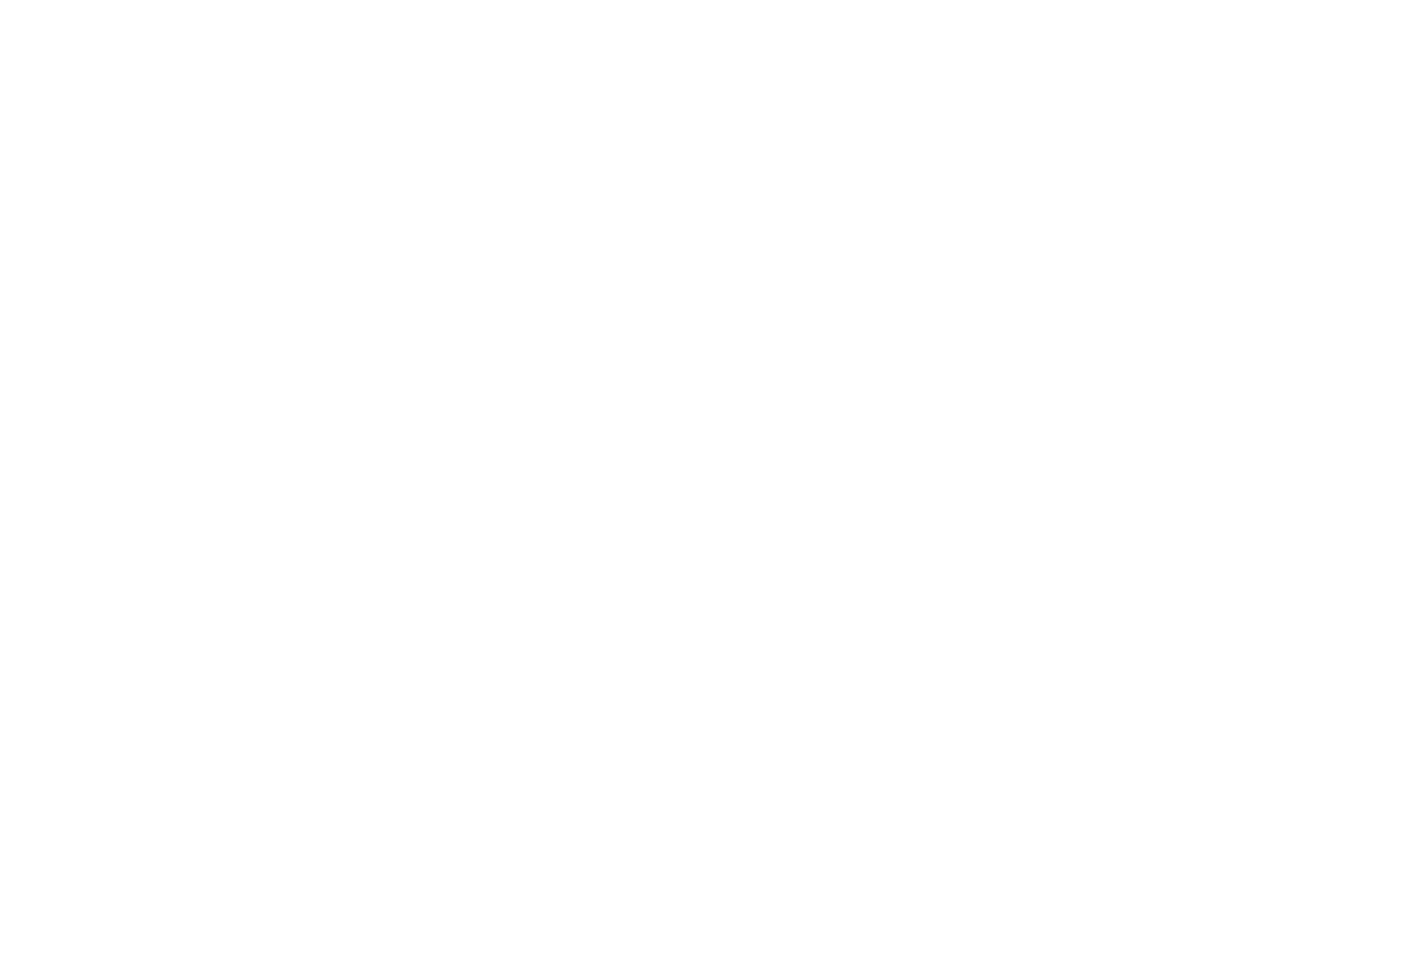 Michel Cusson